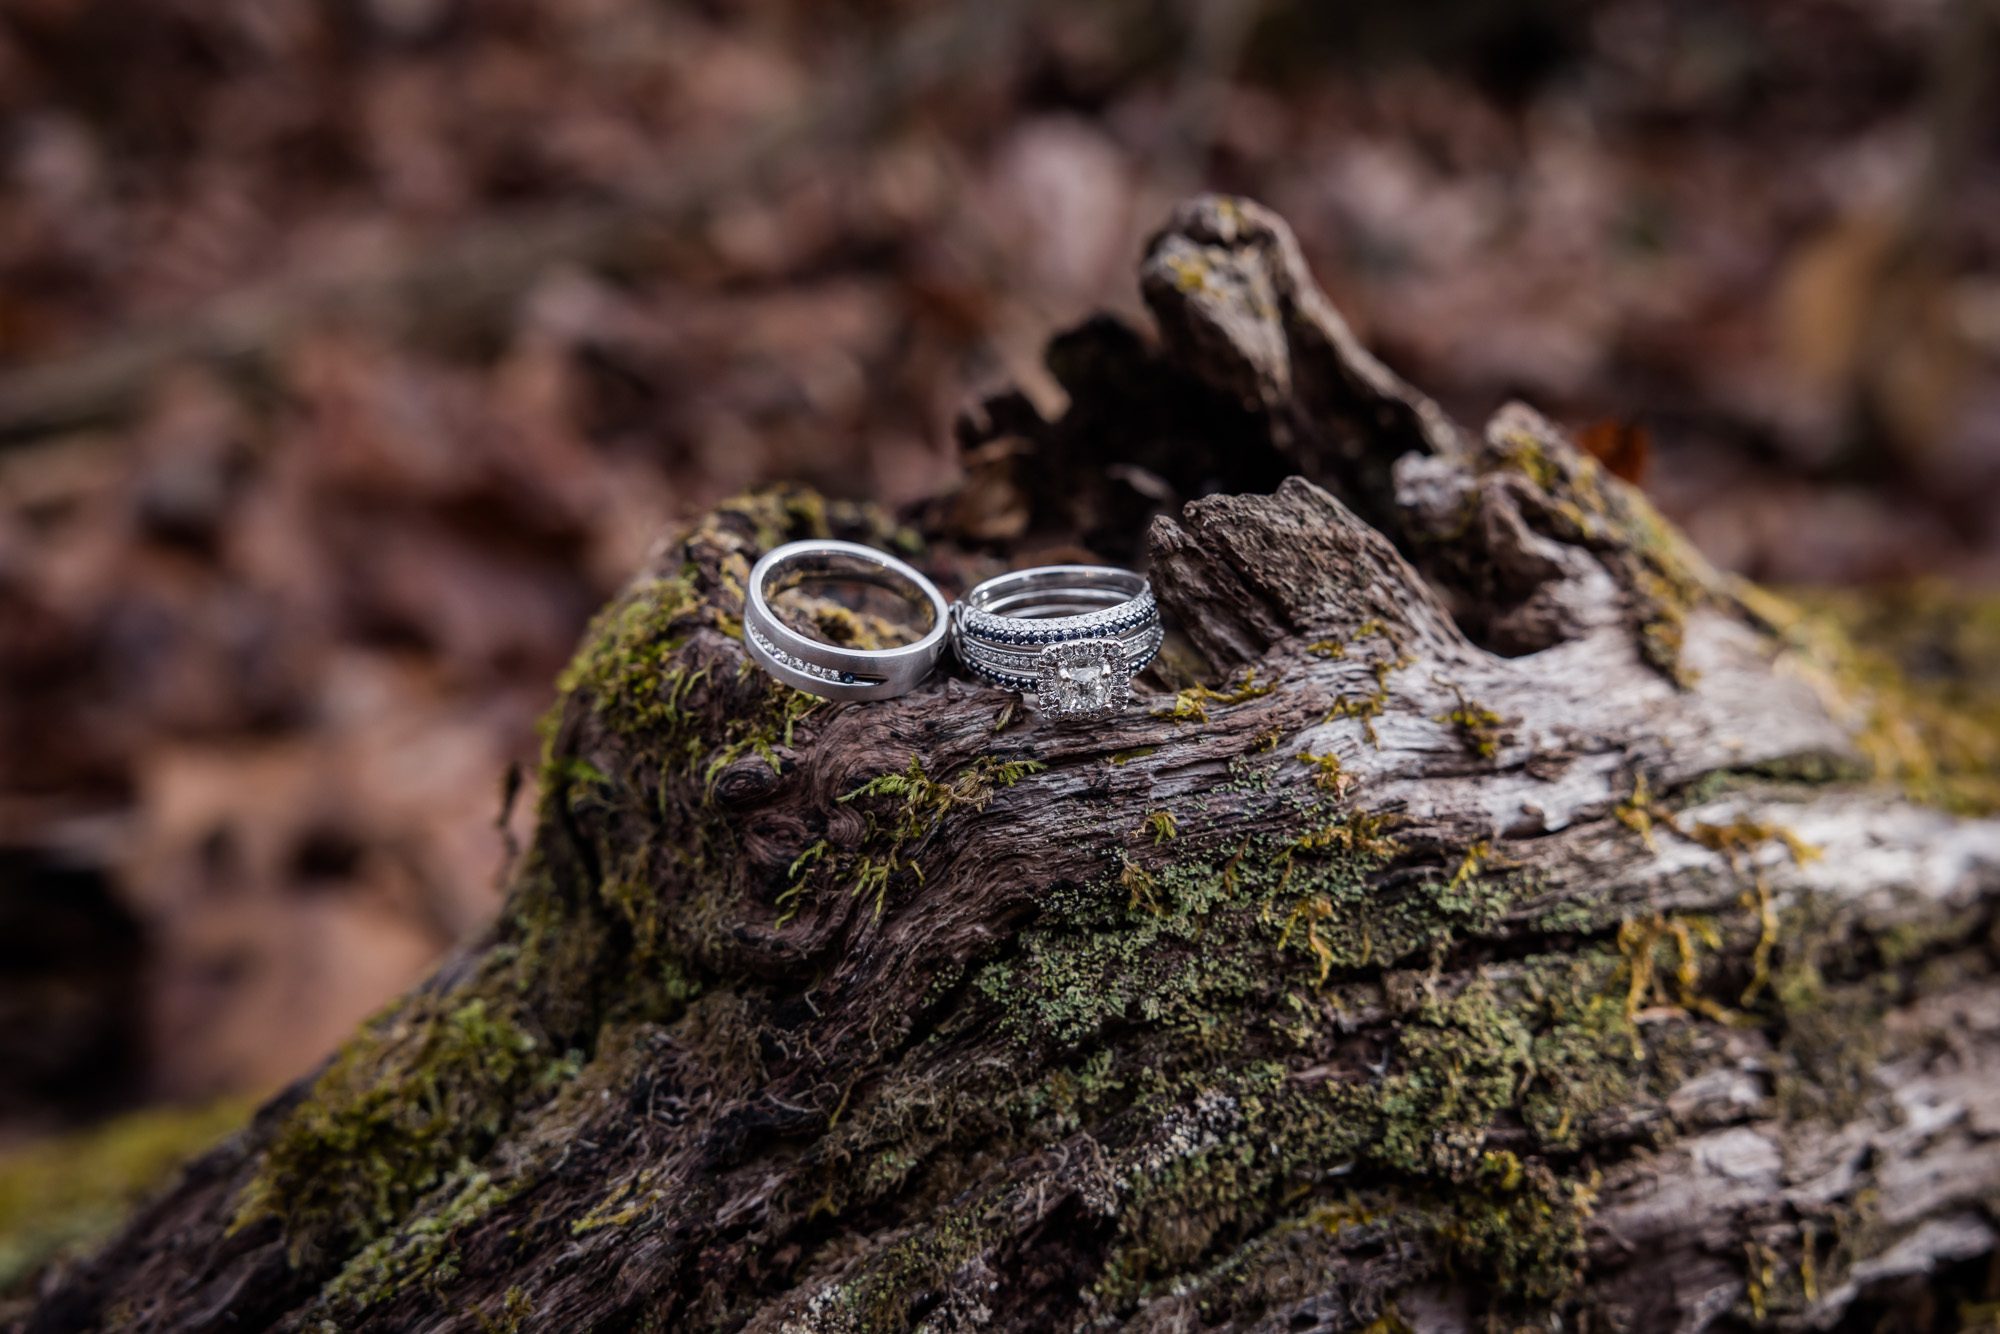 Wedding rings on a log